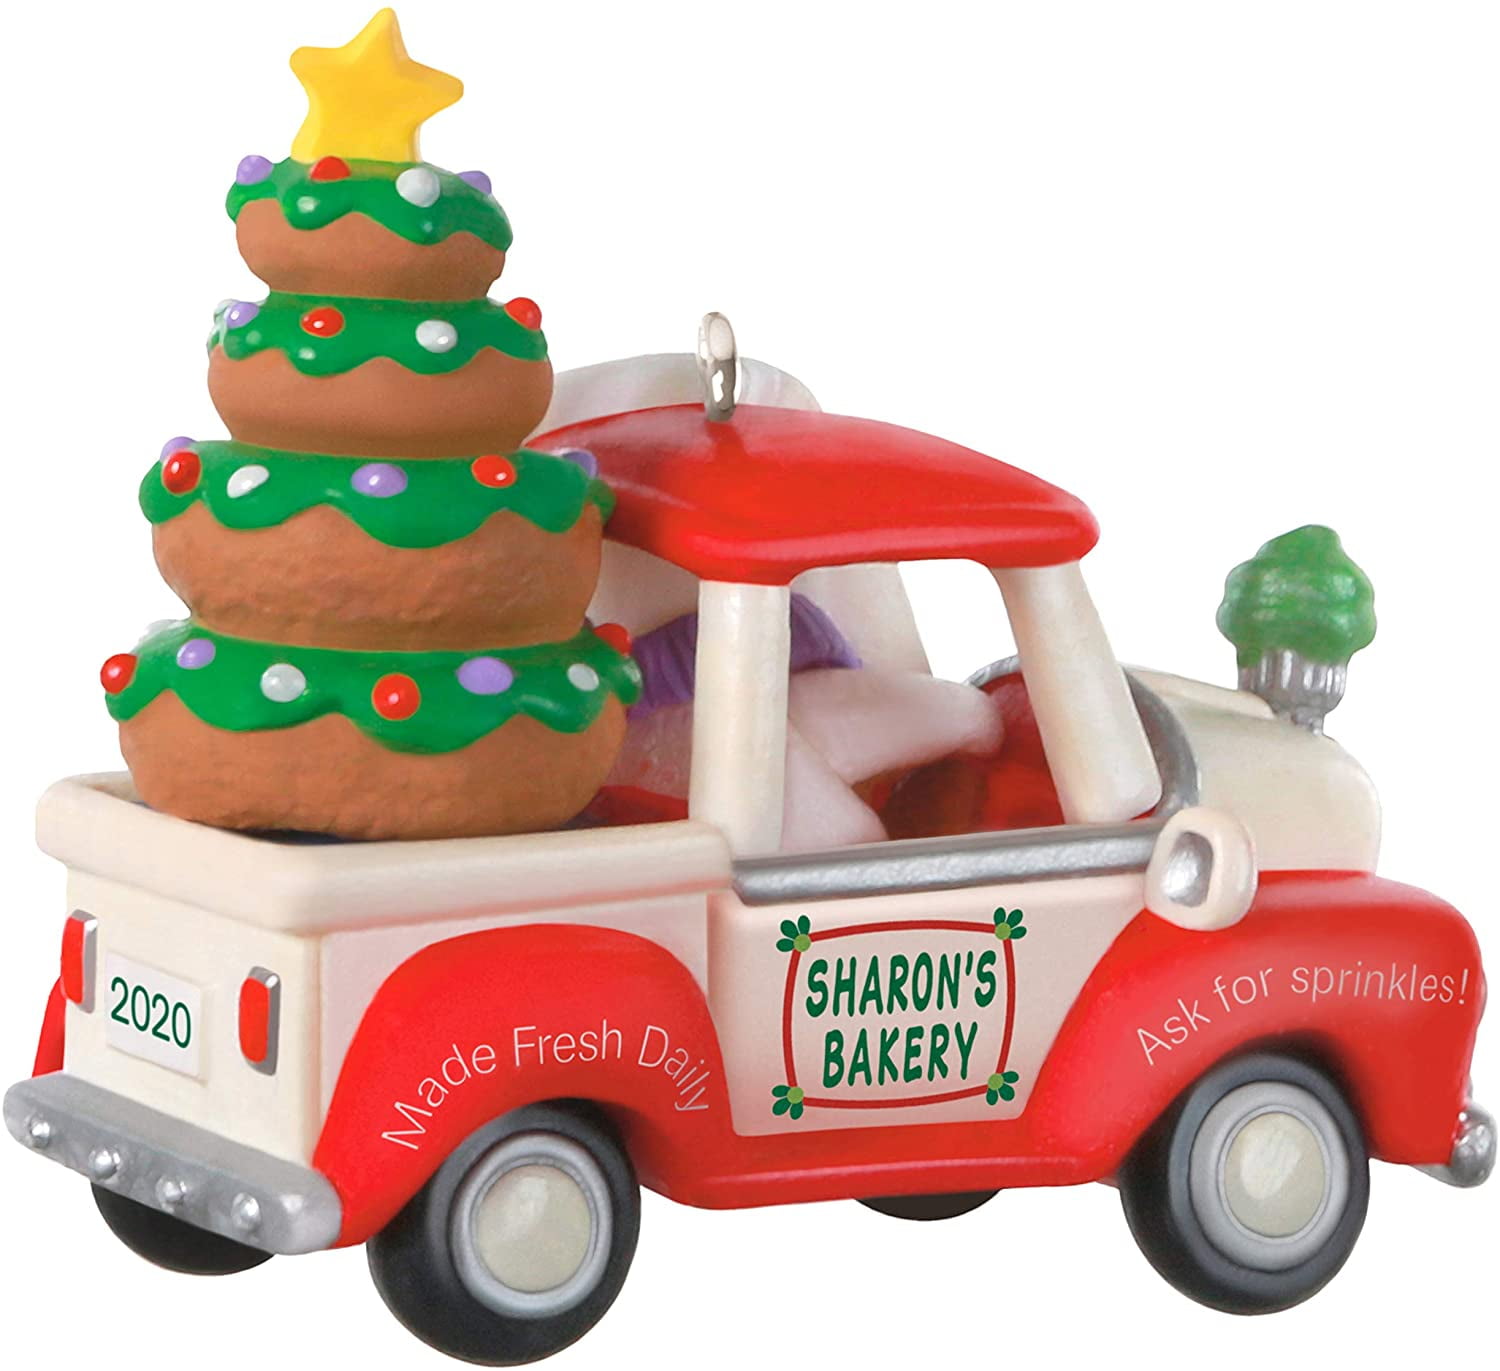 Sweet Decade Candy Snowman Hallmark Keepsake Christmas Ornament 2020 Year-Dated